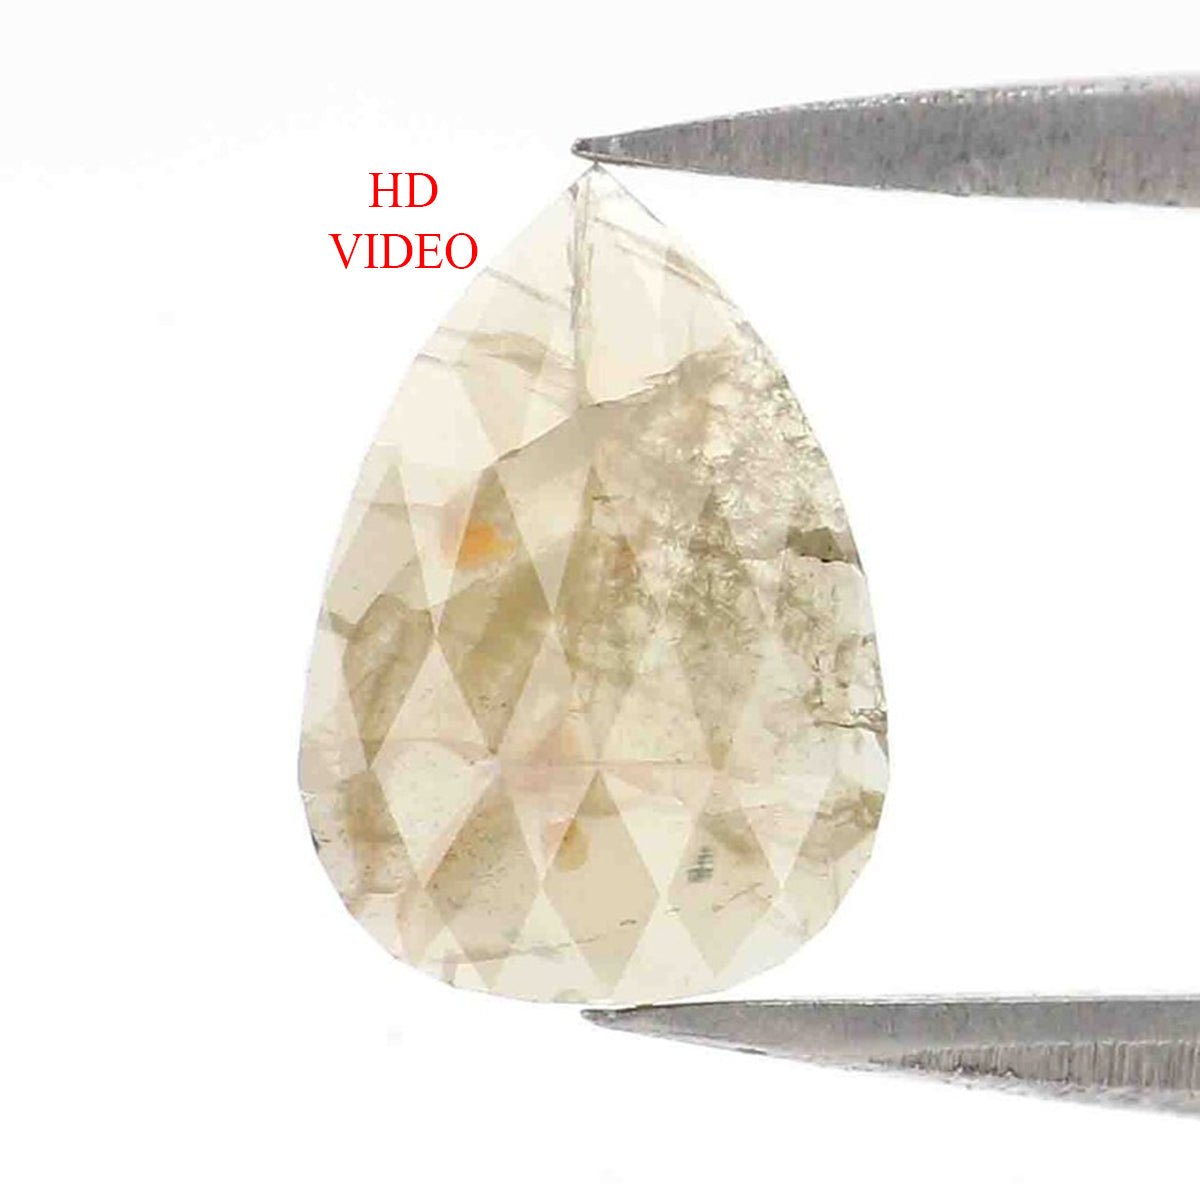 0.71 CT Natural Loose Pear Shape Diamond Yellow Grey Color Pear Cut Diamond 8.40 MM Natural Loose Diamond Pear Shape Rose Cut Diamond LQ7032